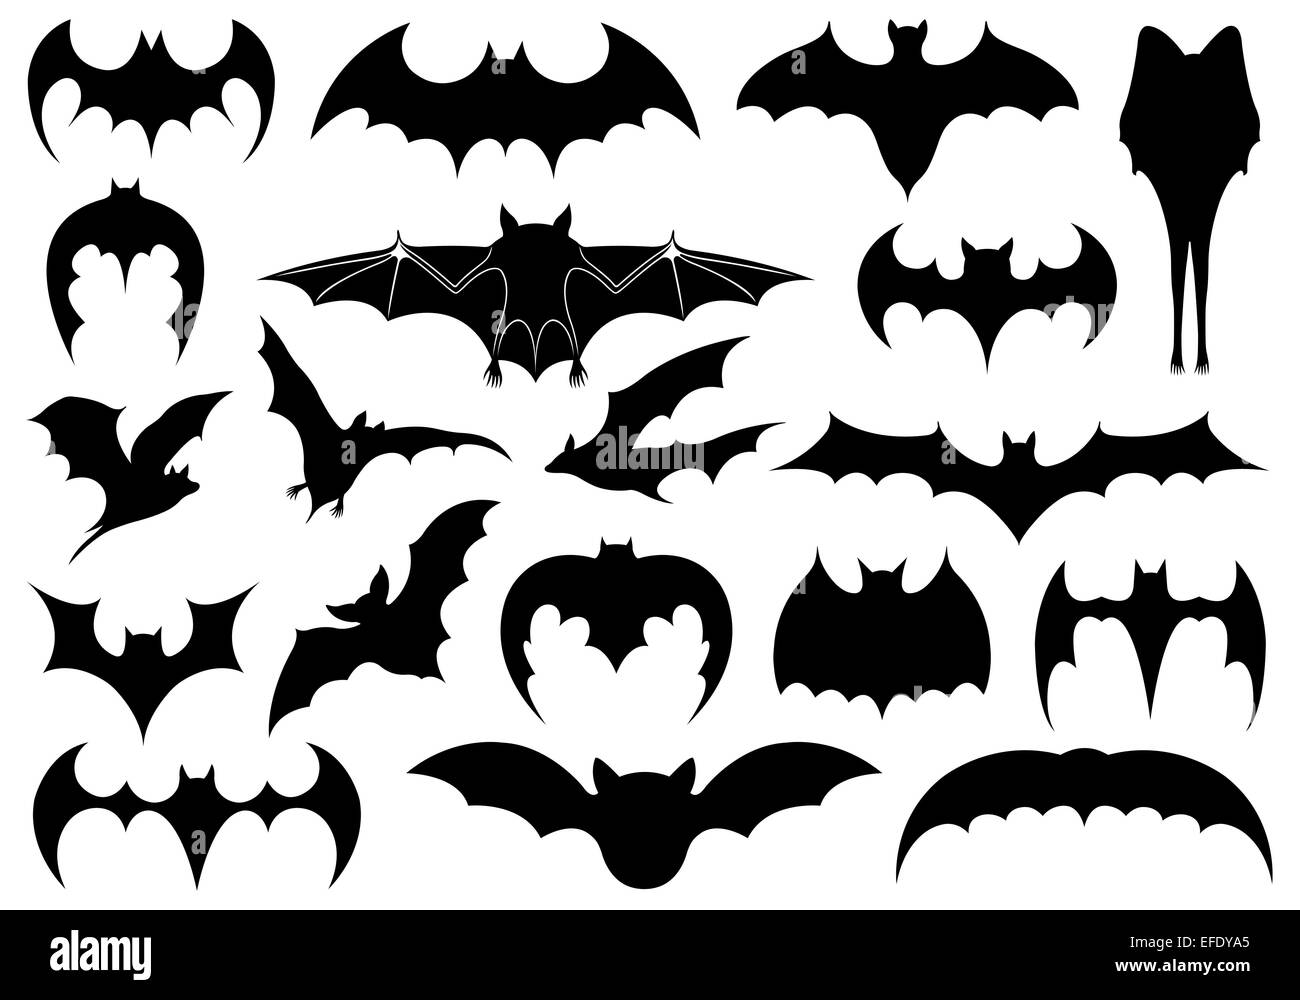 Illustration of different bats Stock Photo